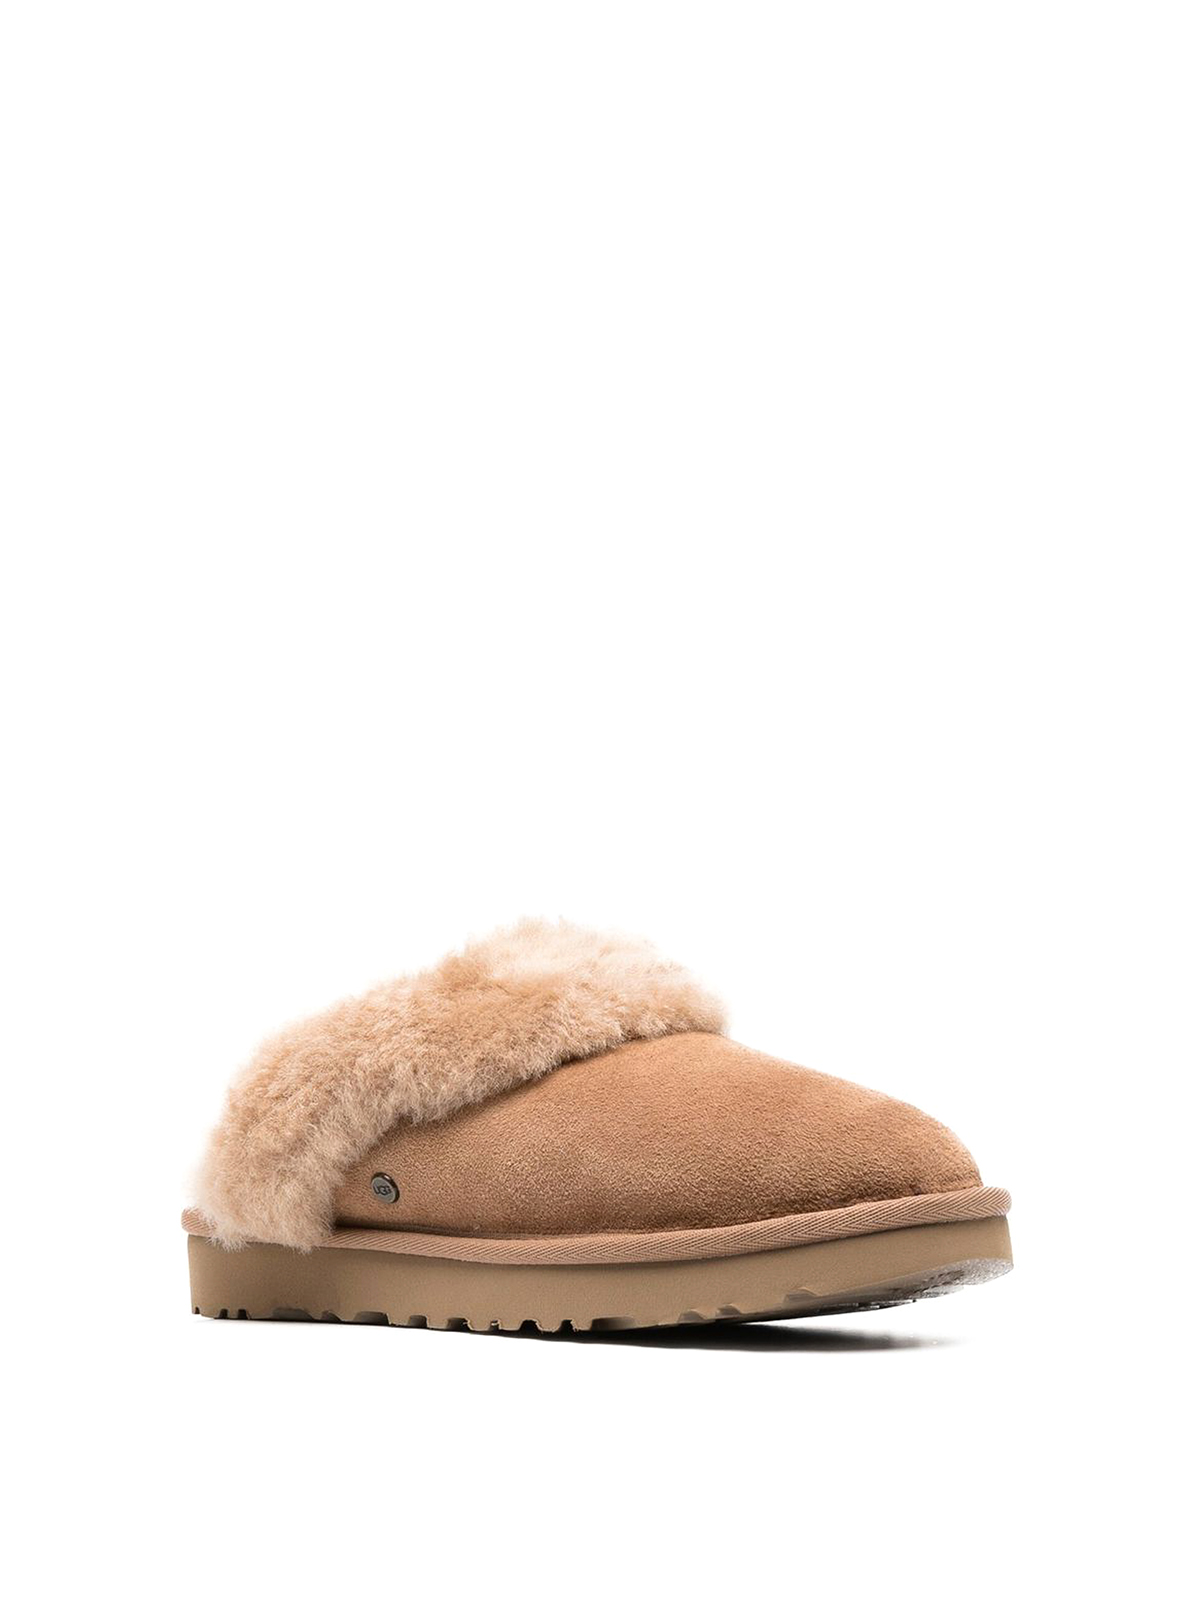 Extreme armoede Afstoten Groene bonen Loafers & Slippers Ugg - Shearling-trim slippers - 1130876WCHESTNUT